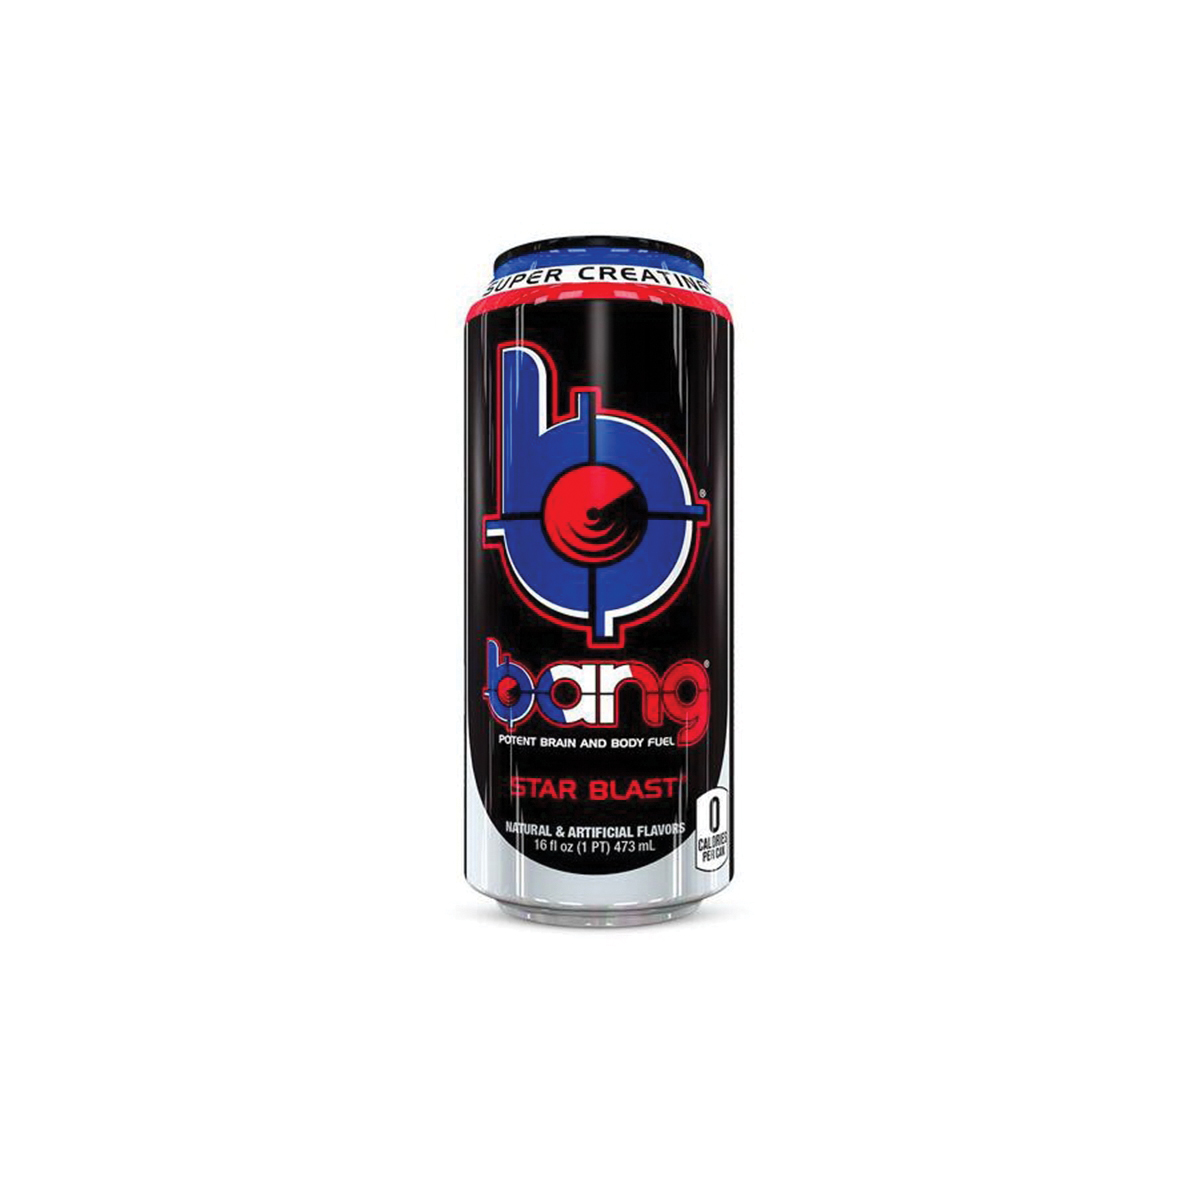 151117 Energy Drink, Liquid, Star Blast Flavor, 16 oz Can, 12/CS